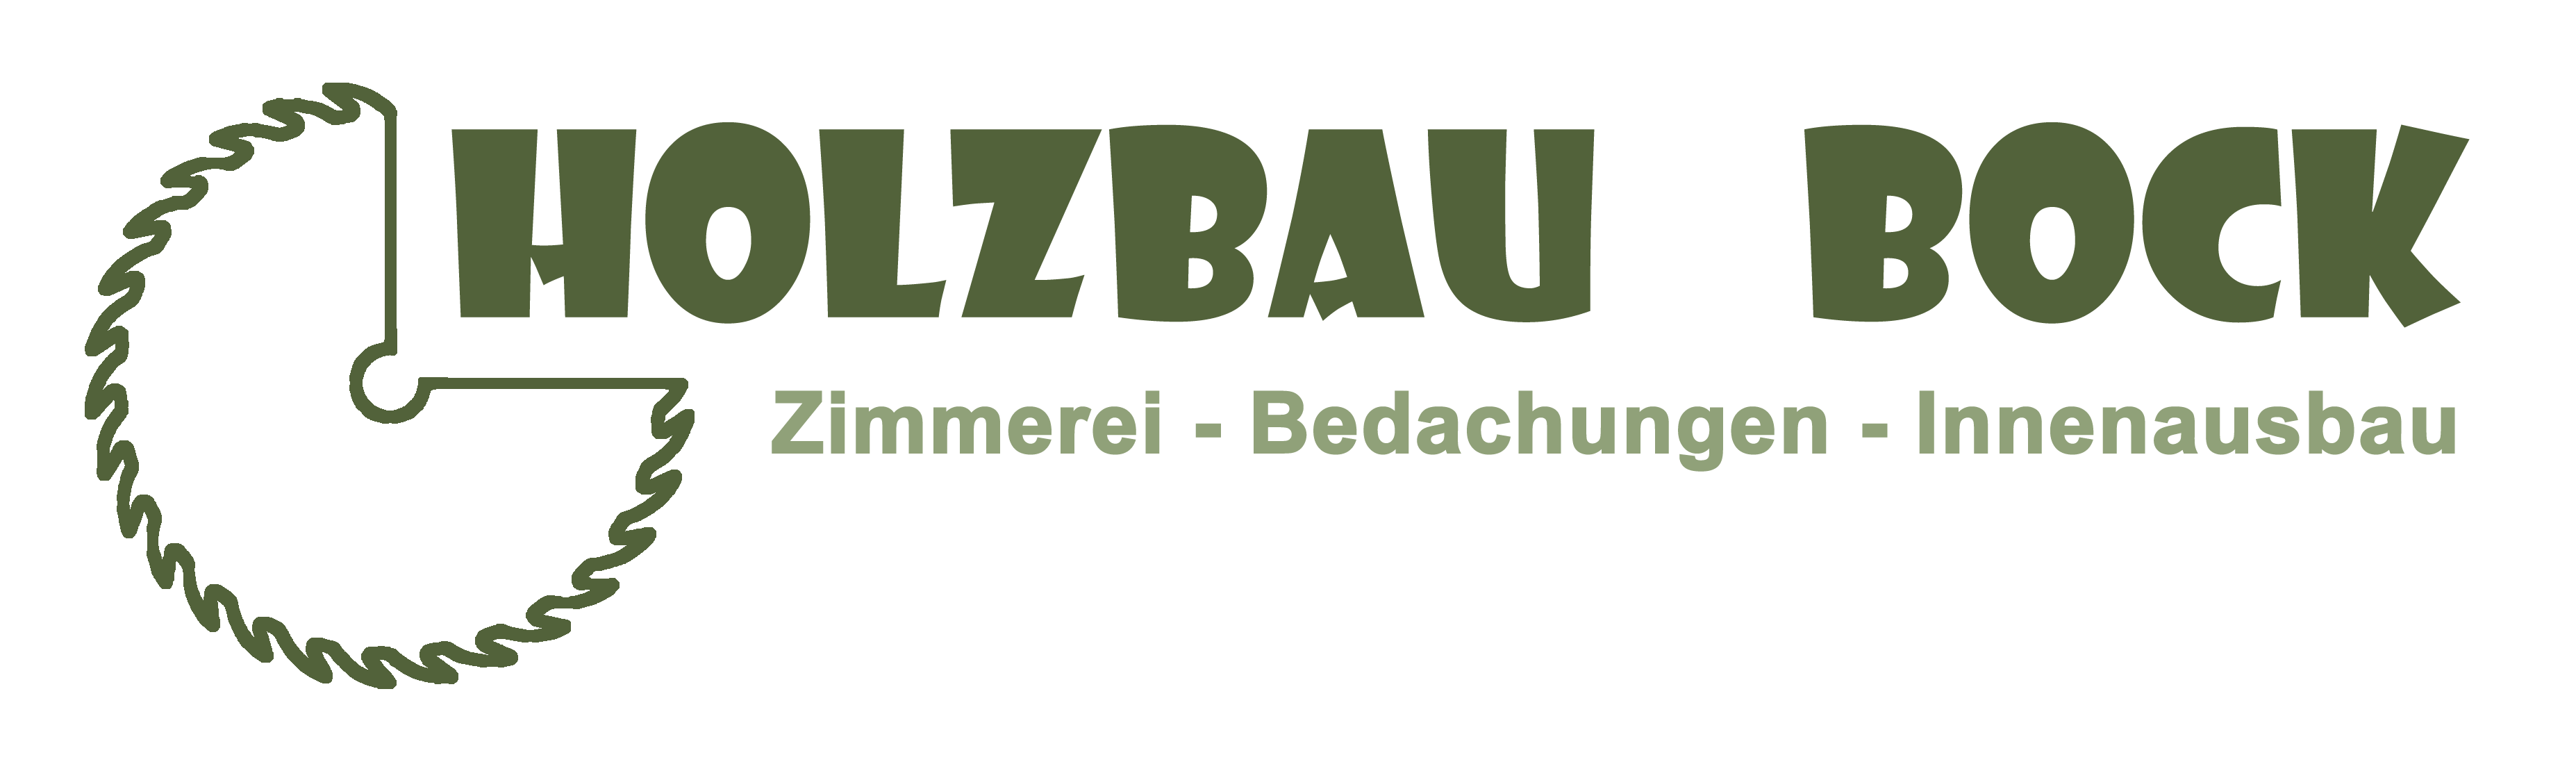 Holzbau-Bock